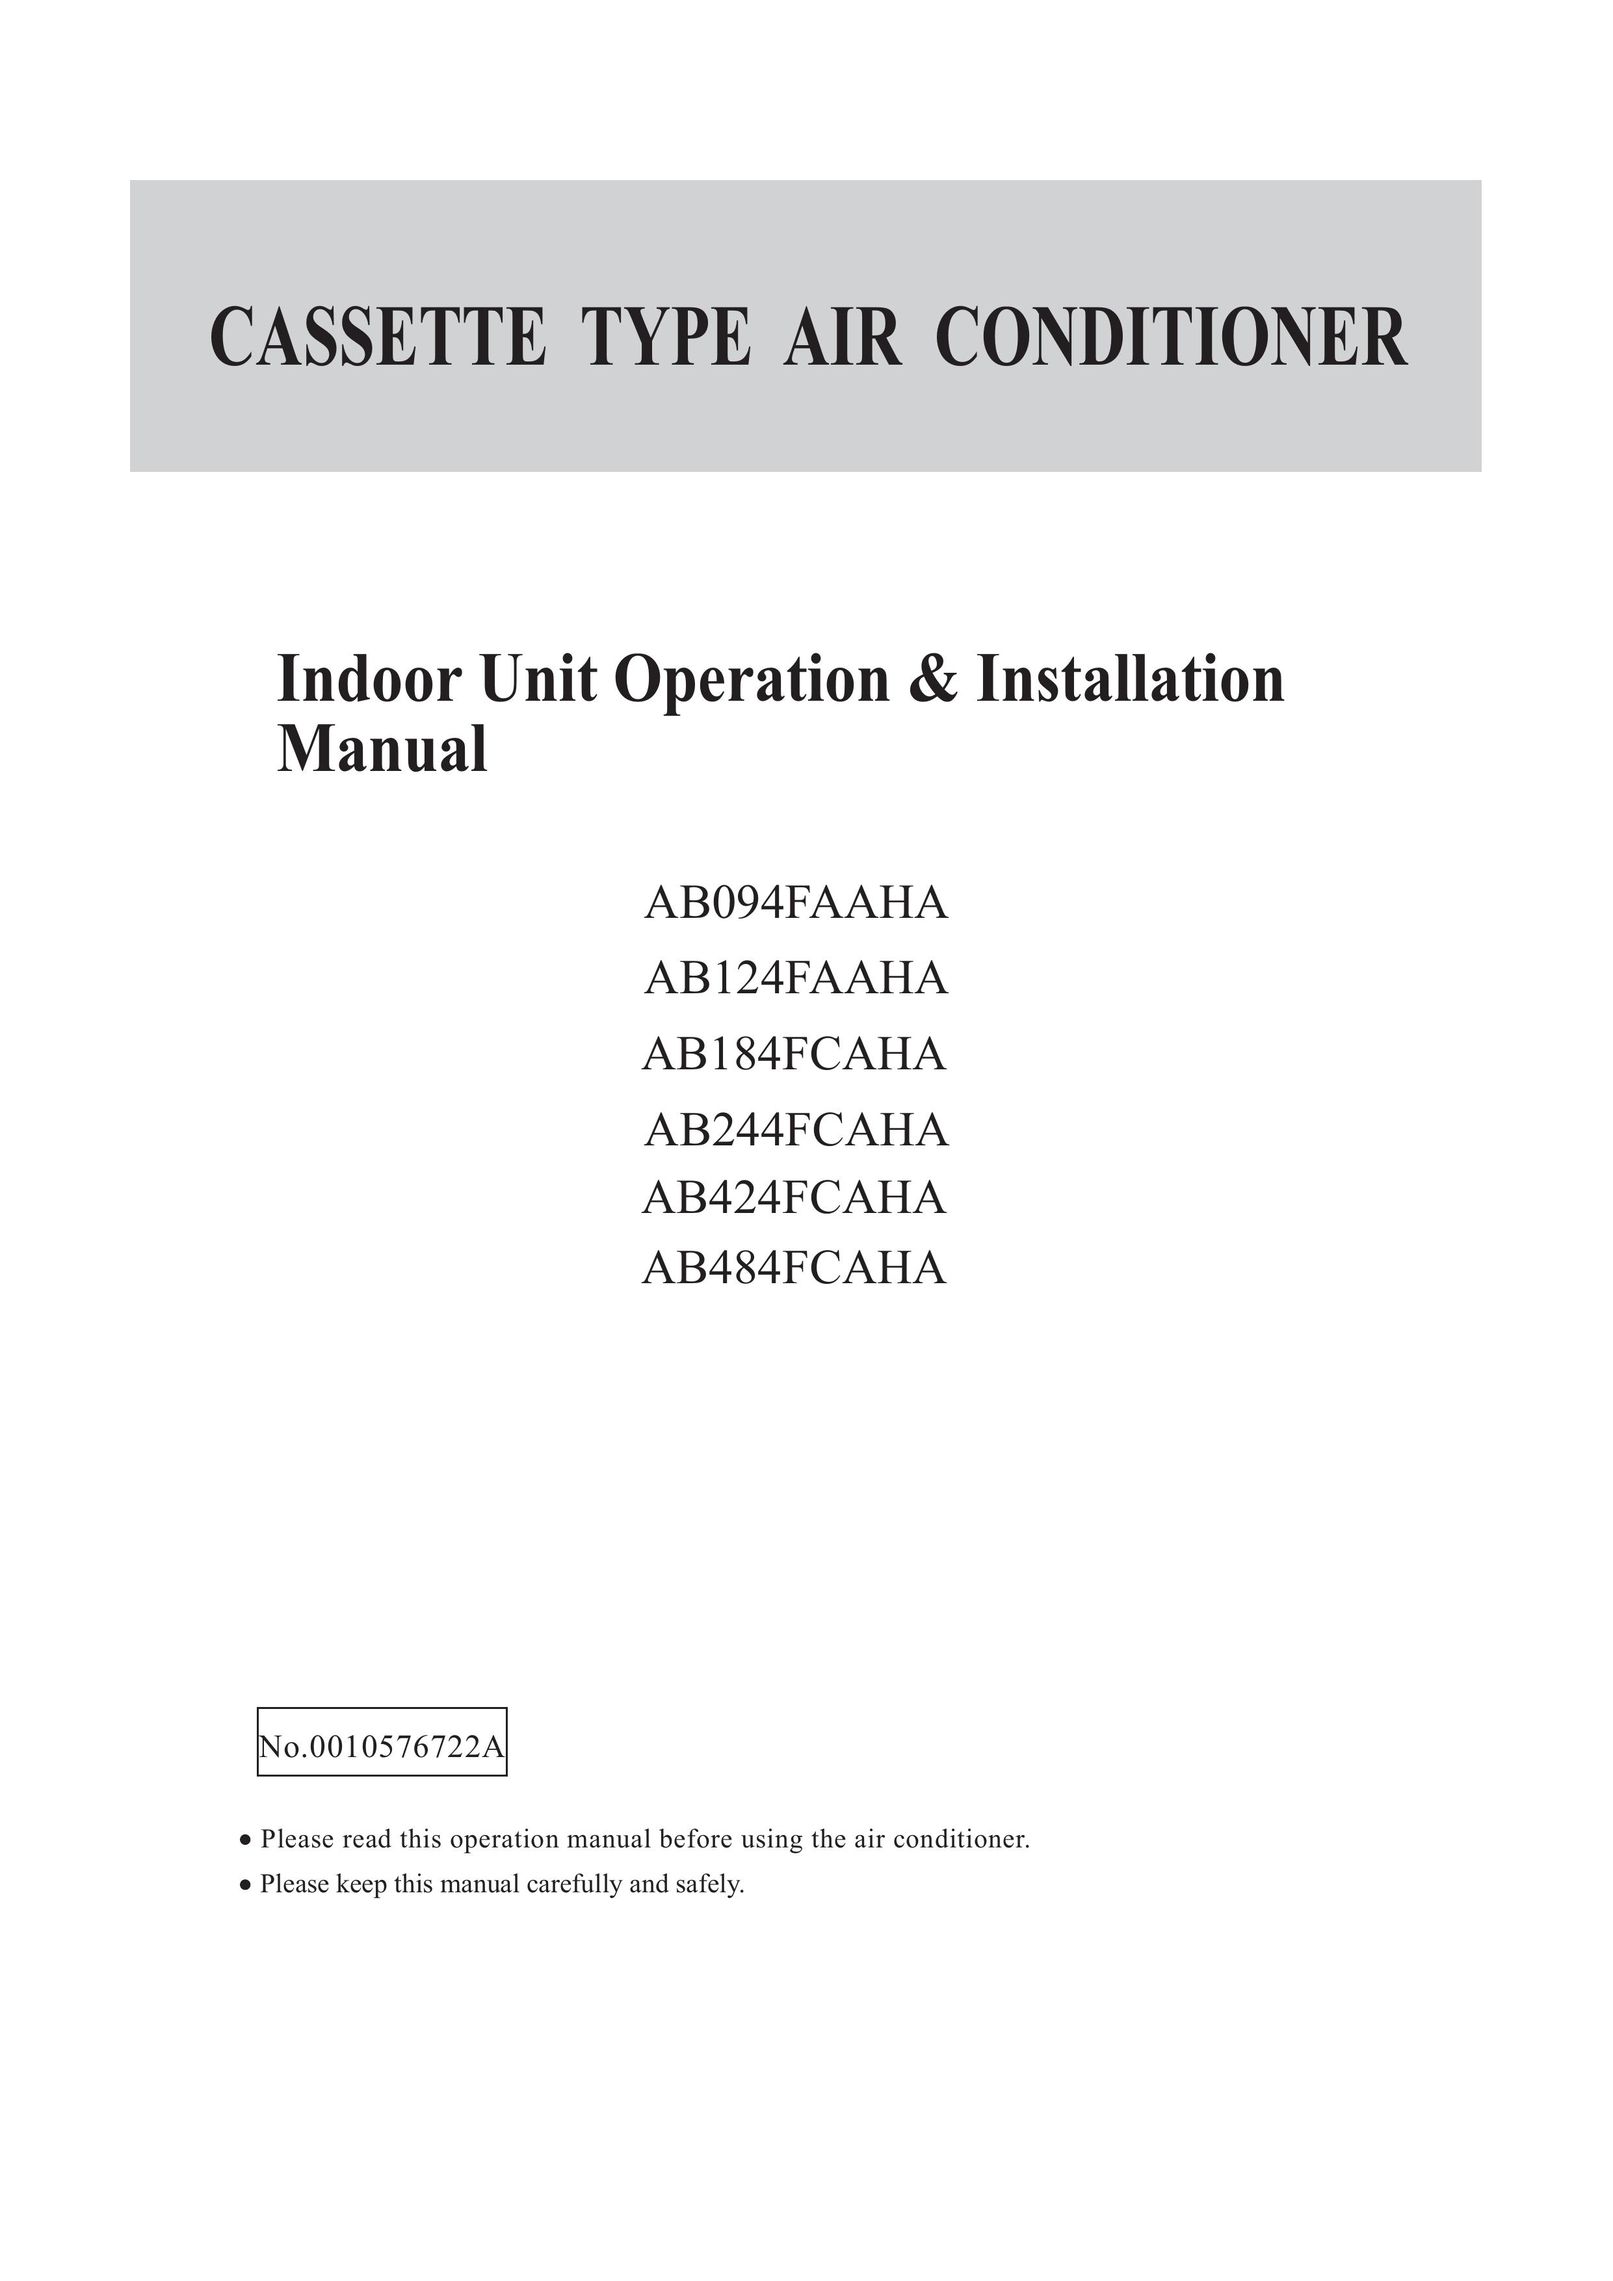 Haier AB484FCAHA Air Conditioner User Manual